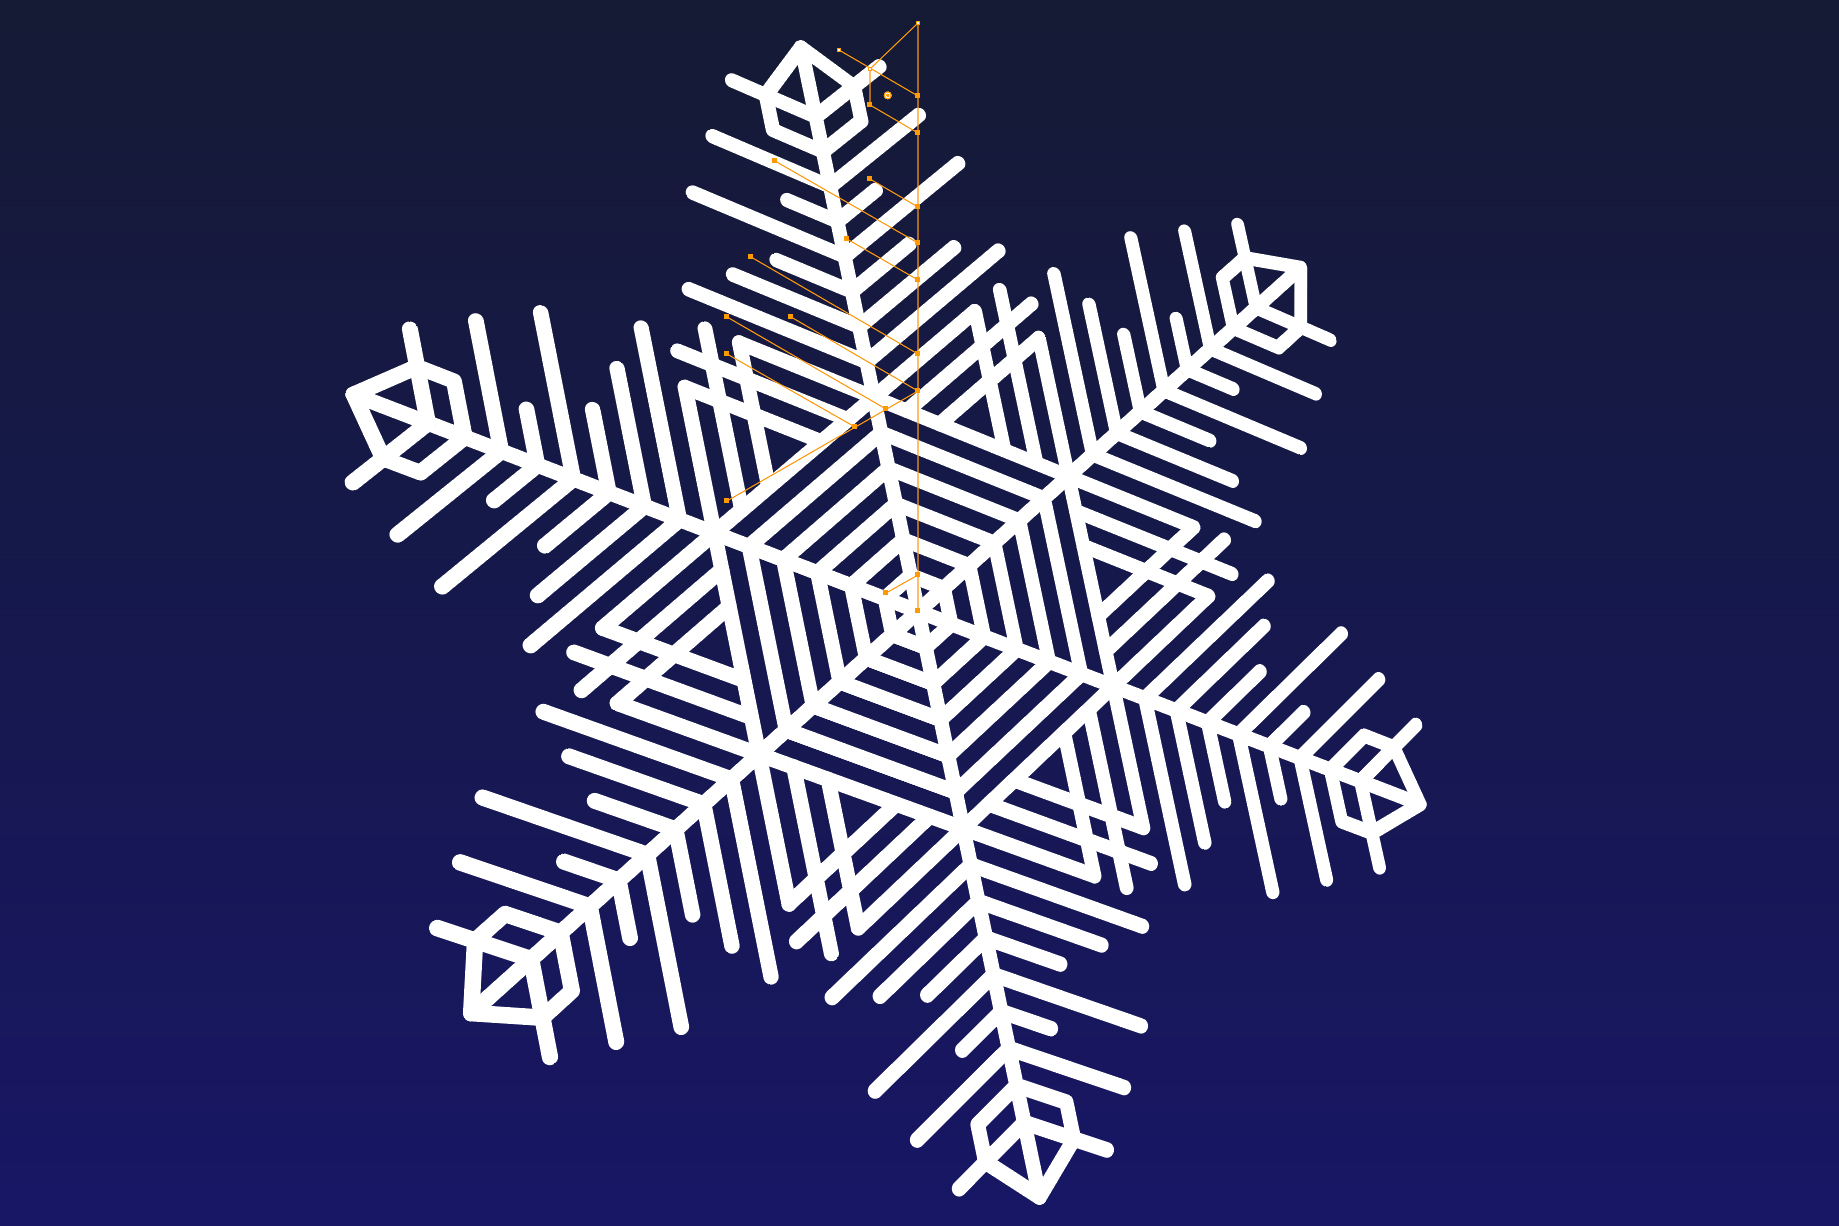 Snowflake in Illustrator